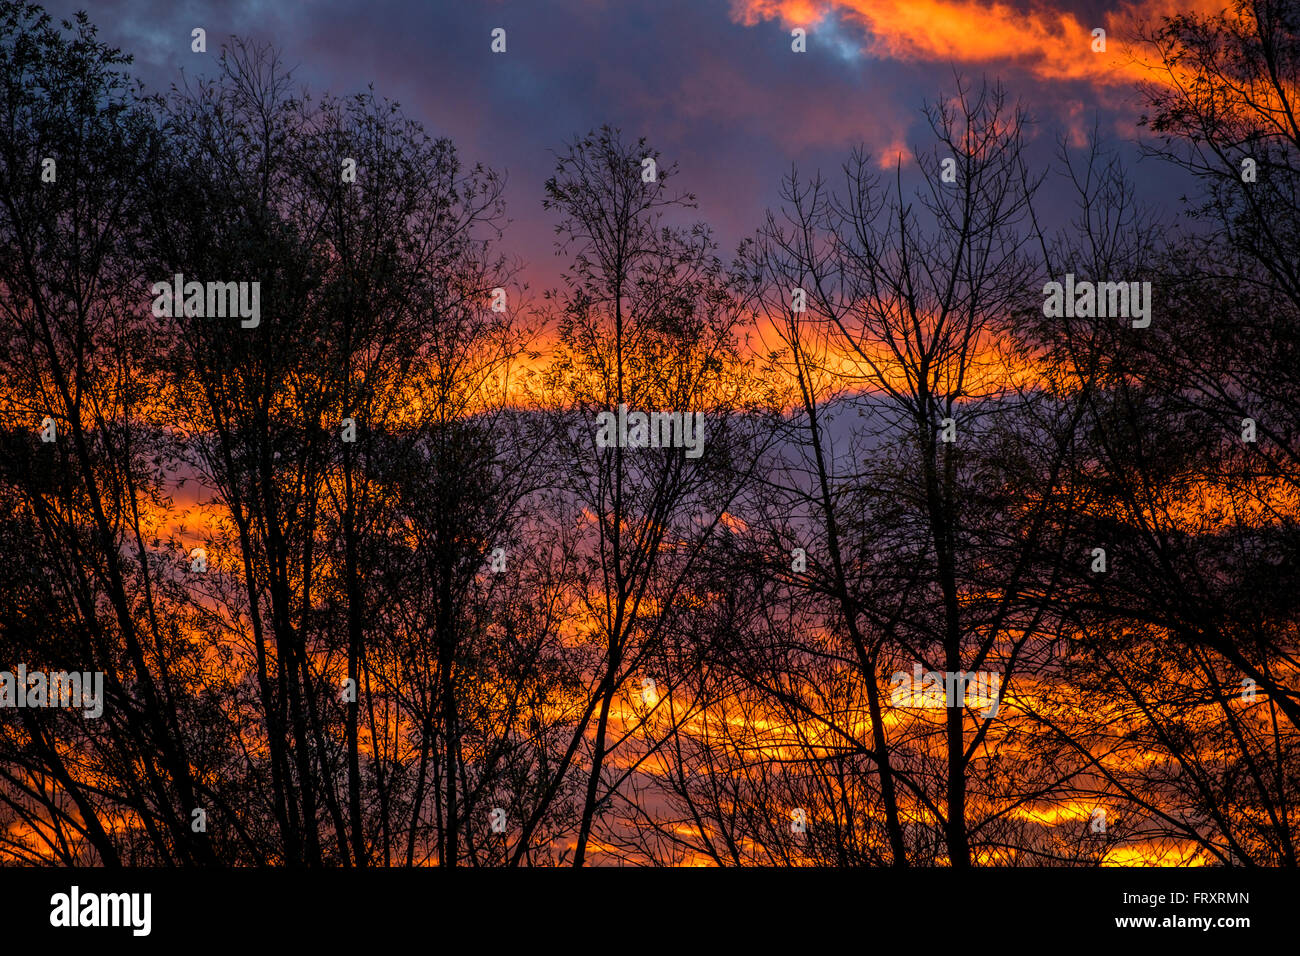 Sunrise, Silhouette of trees, Blindenmarkt, Mostviertel, Lower Austria, Austria Stock Photo